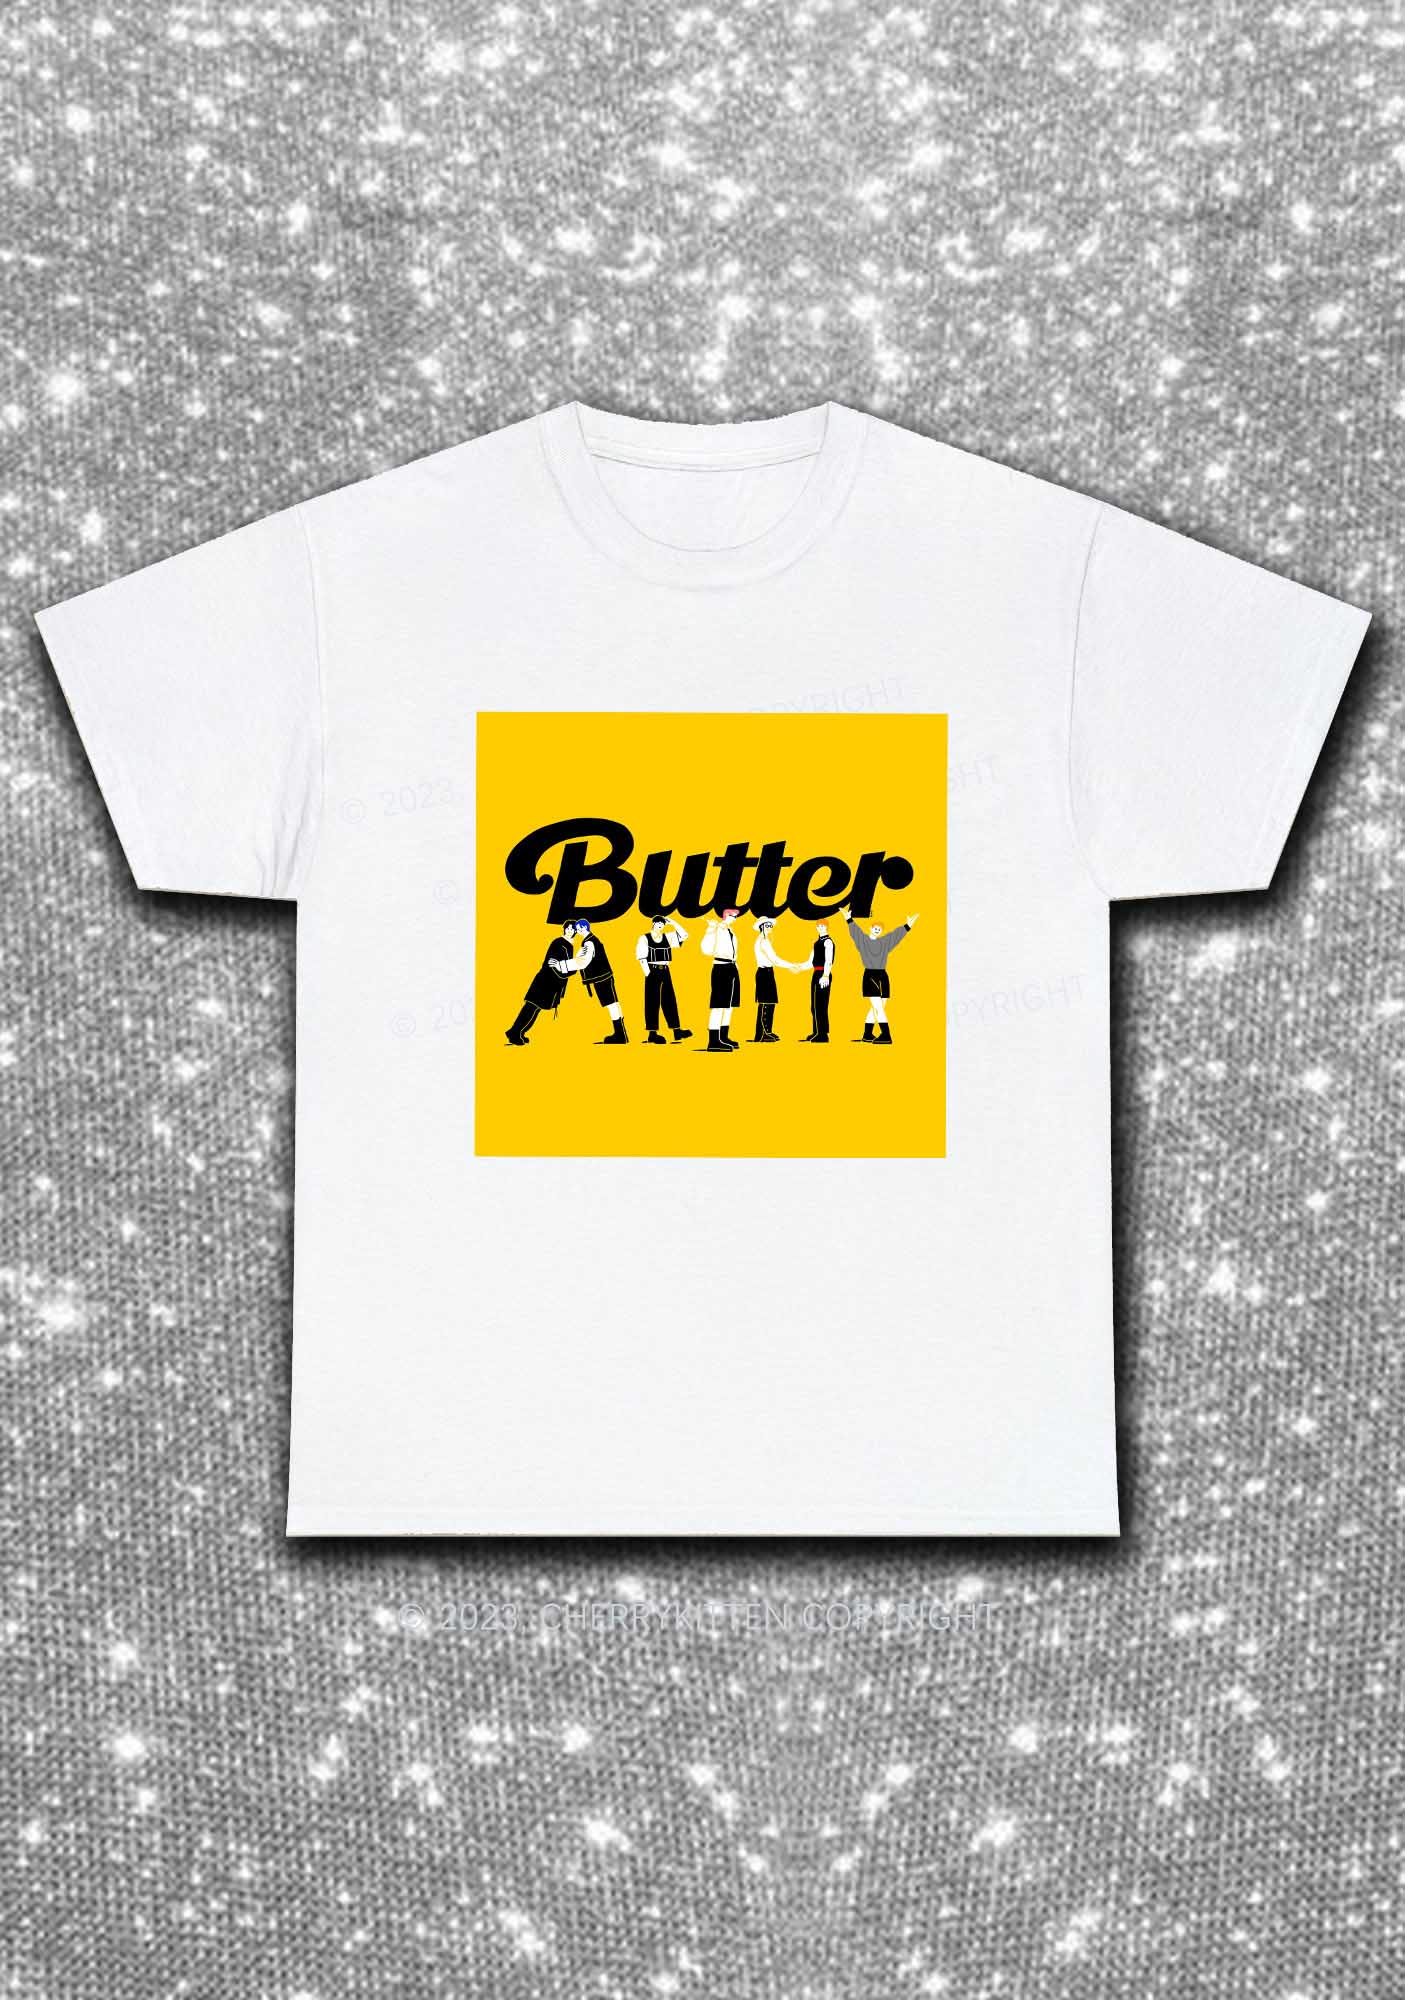 Butter Bangtan Boys Kpop Y2K Chunky Shirt Cherrykitten